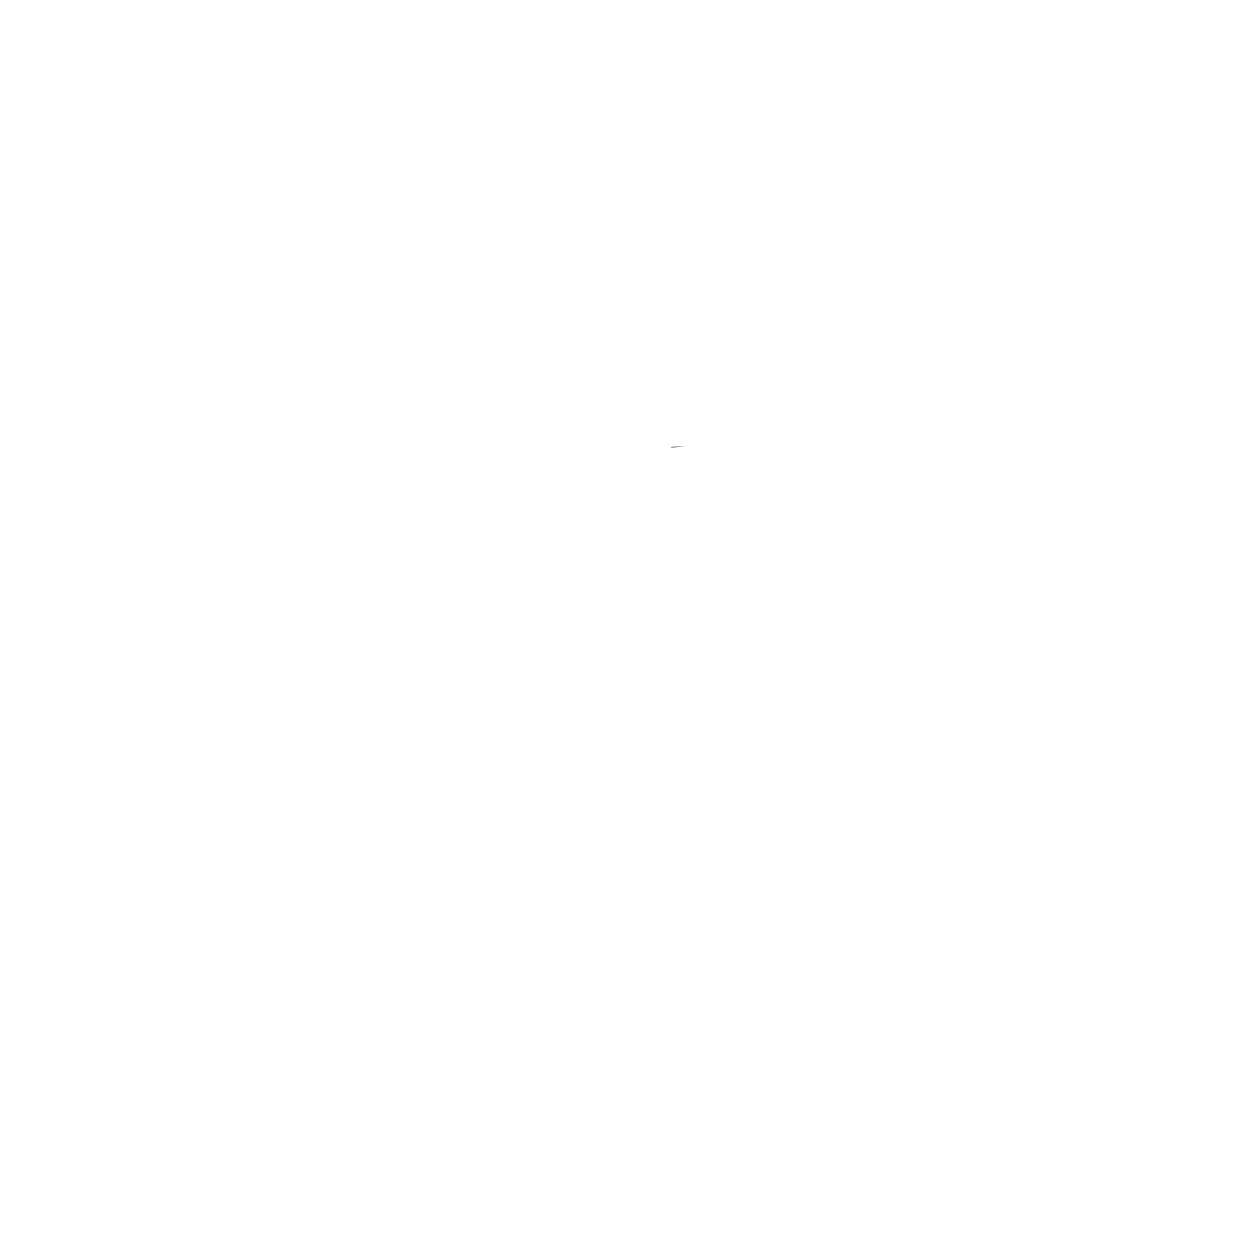 Vine Trail Logo